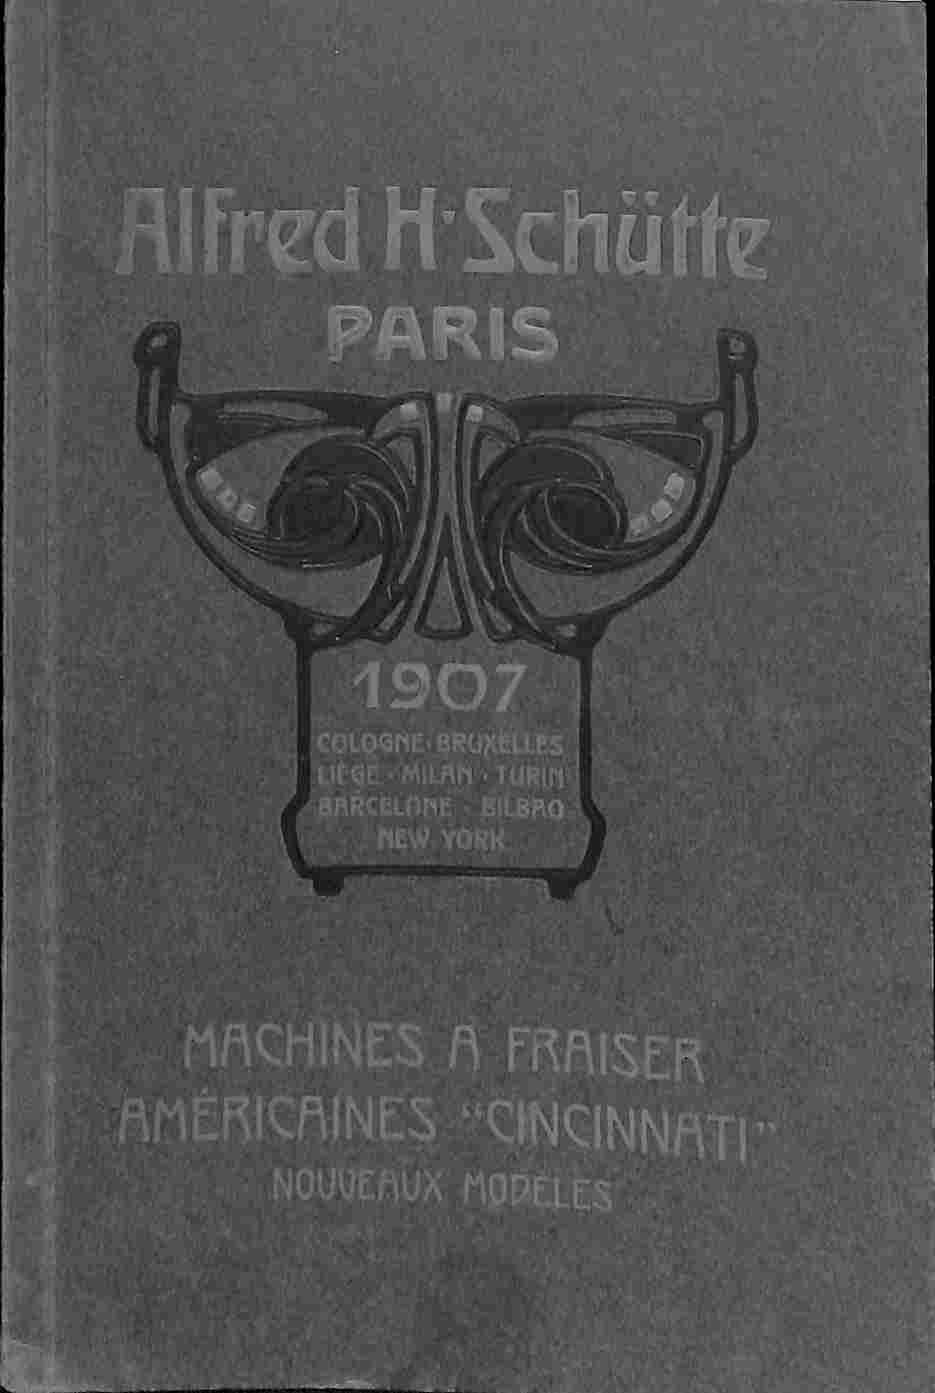 Alfred H. Schutte, Paris. Machines a fraiser americaines Cincinnati. Nouveau modeles